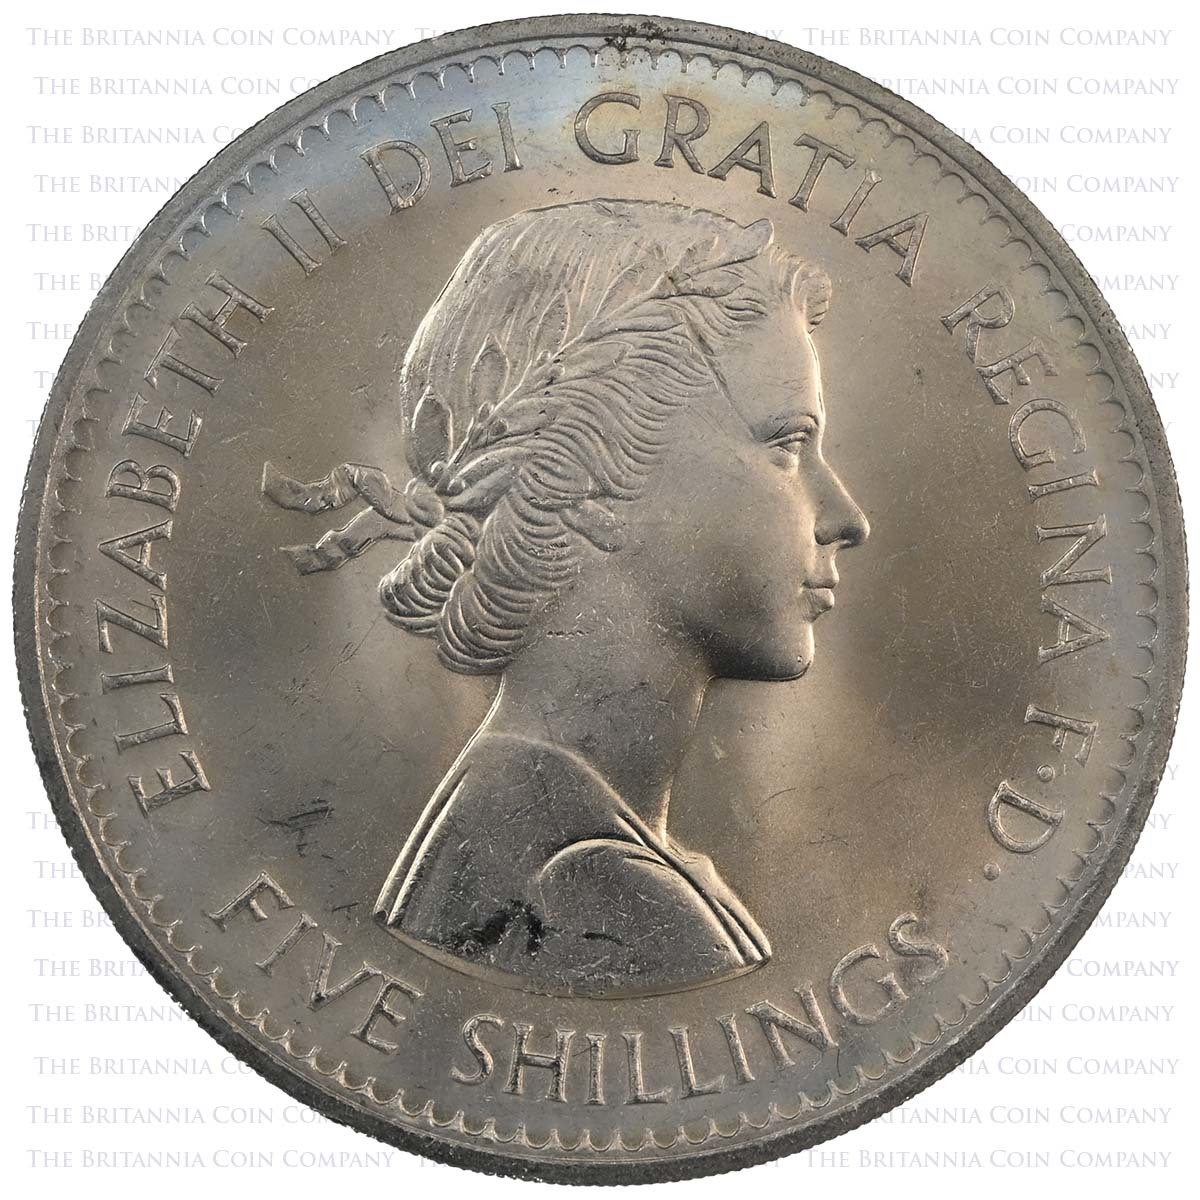 2004 Elizabeth II Gillick Portrait 13 Coin Set 1960 Crown Obverse